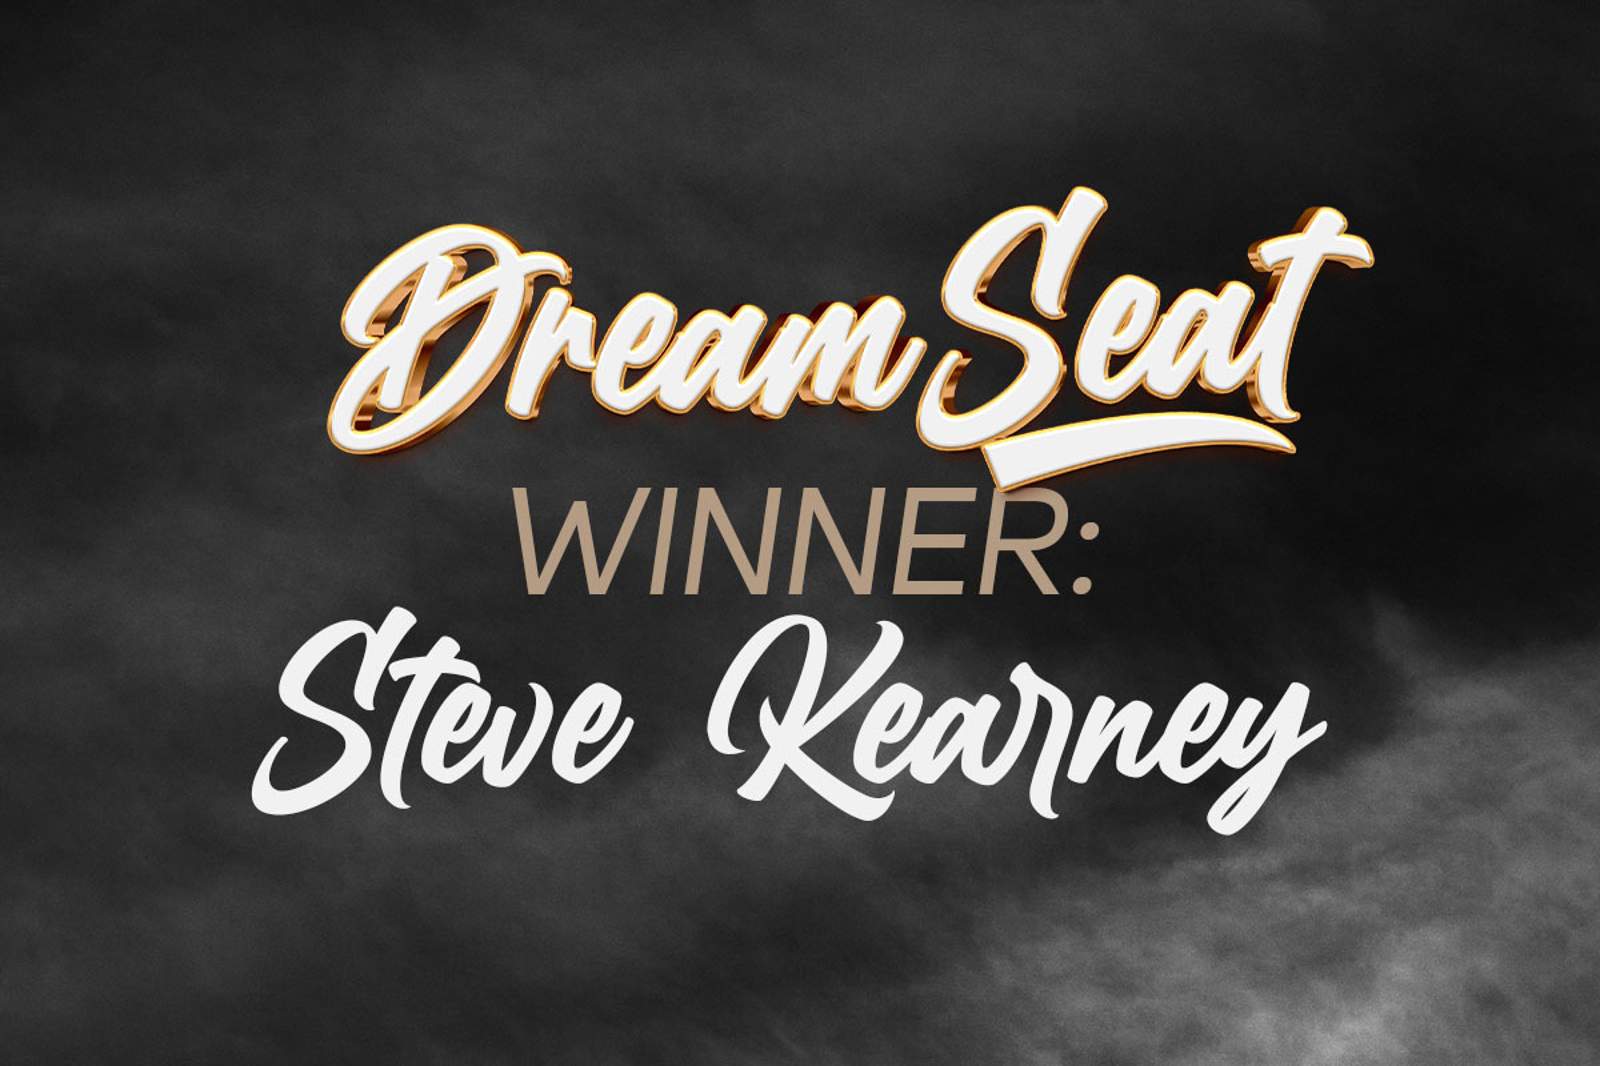 Steve Kearney Wins Dream Seat into 2023 PGT Championship